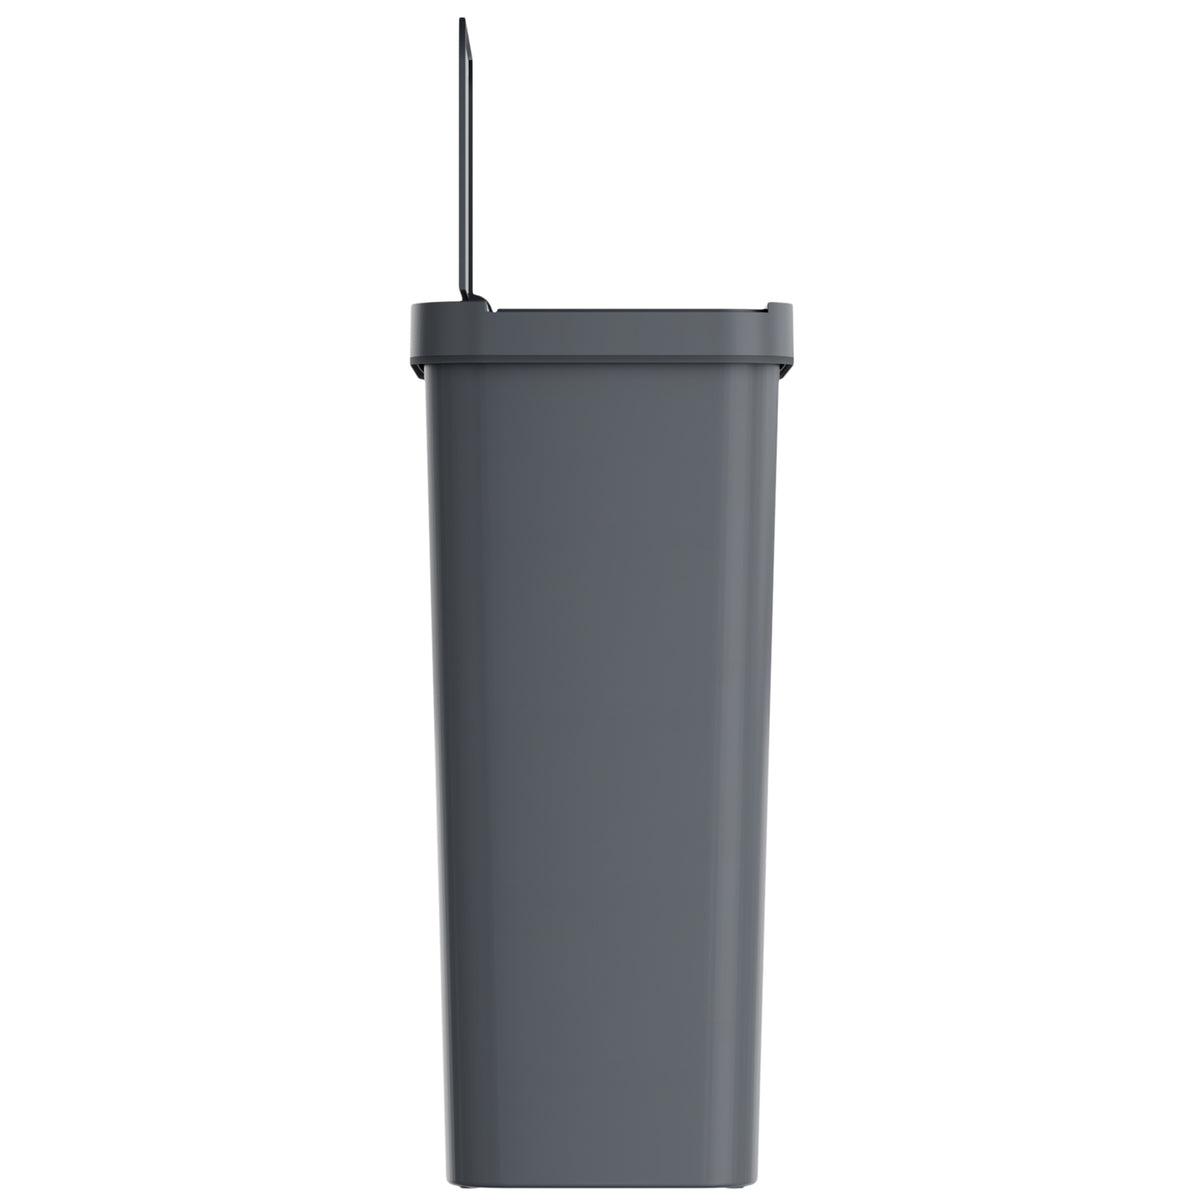 13.2 Gallon / 50 Liter Prime Plastic Sensor Trash Can (Gray)